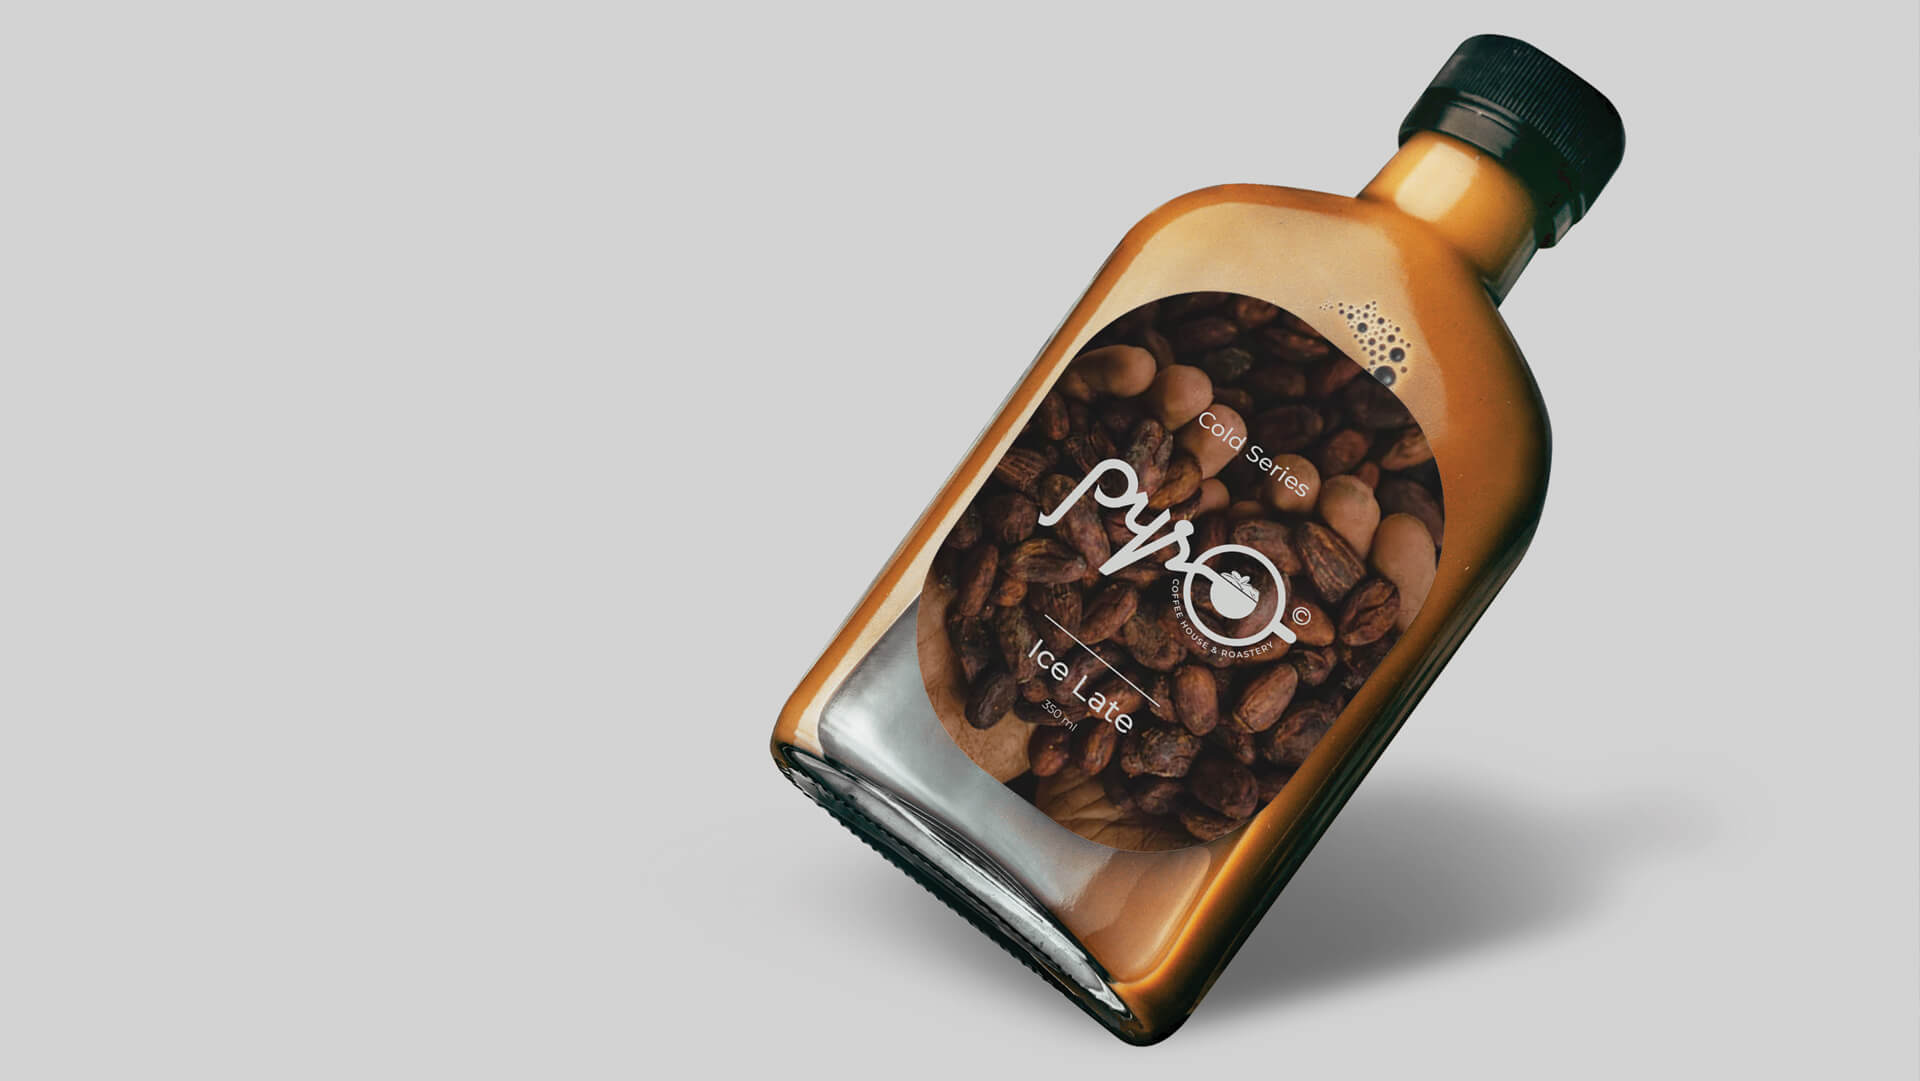 Pyro Coffee